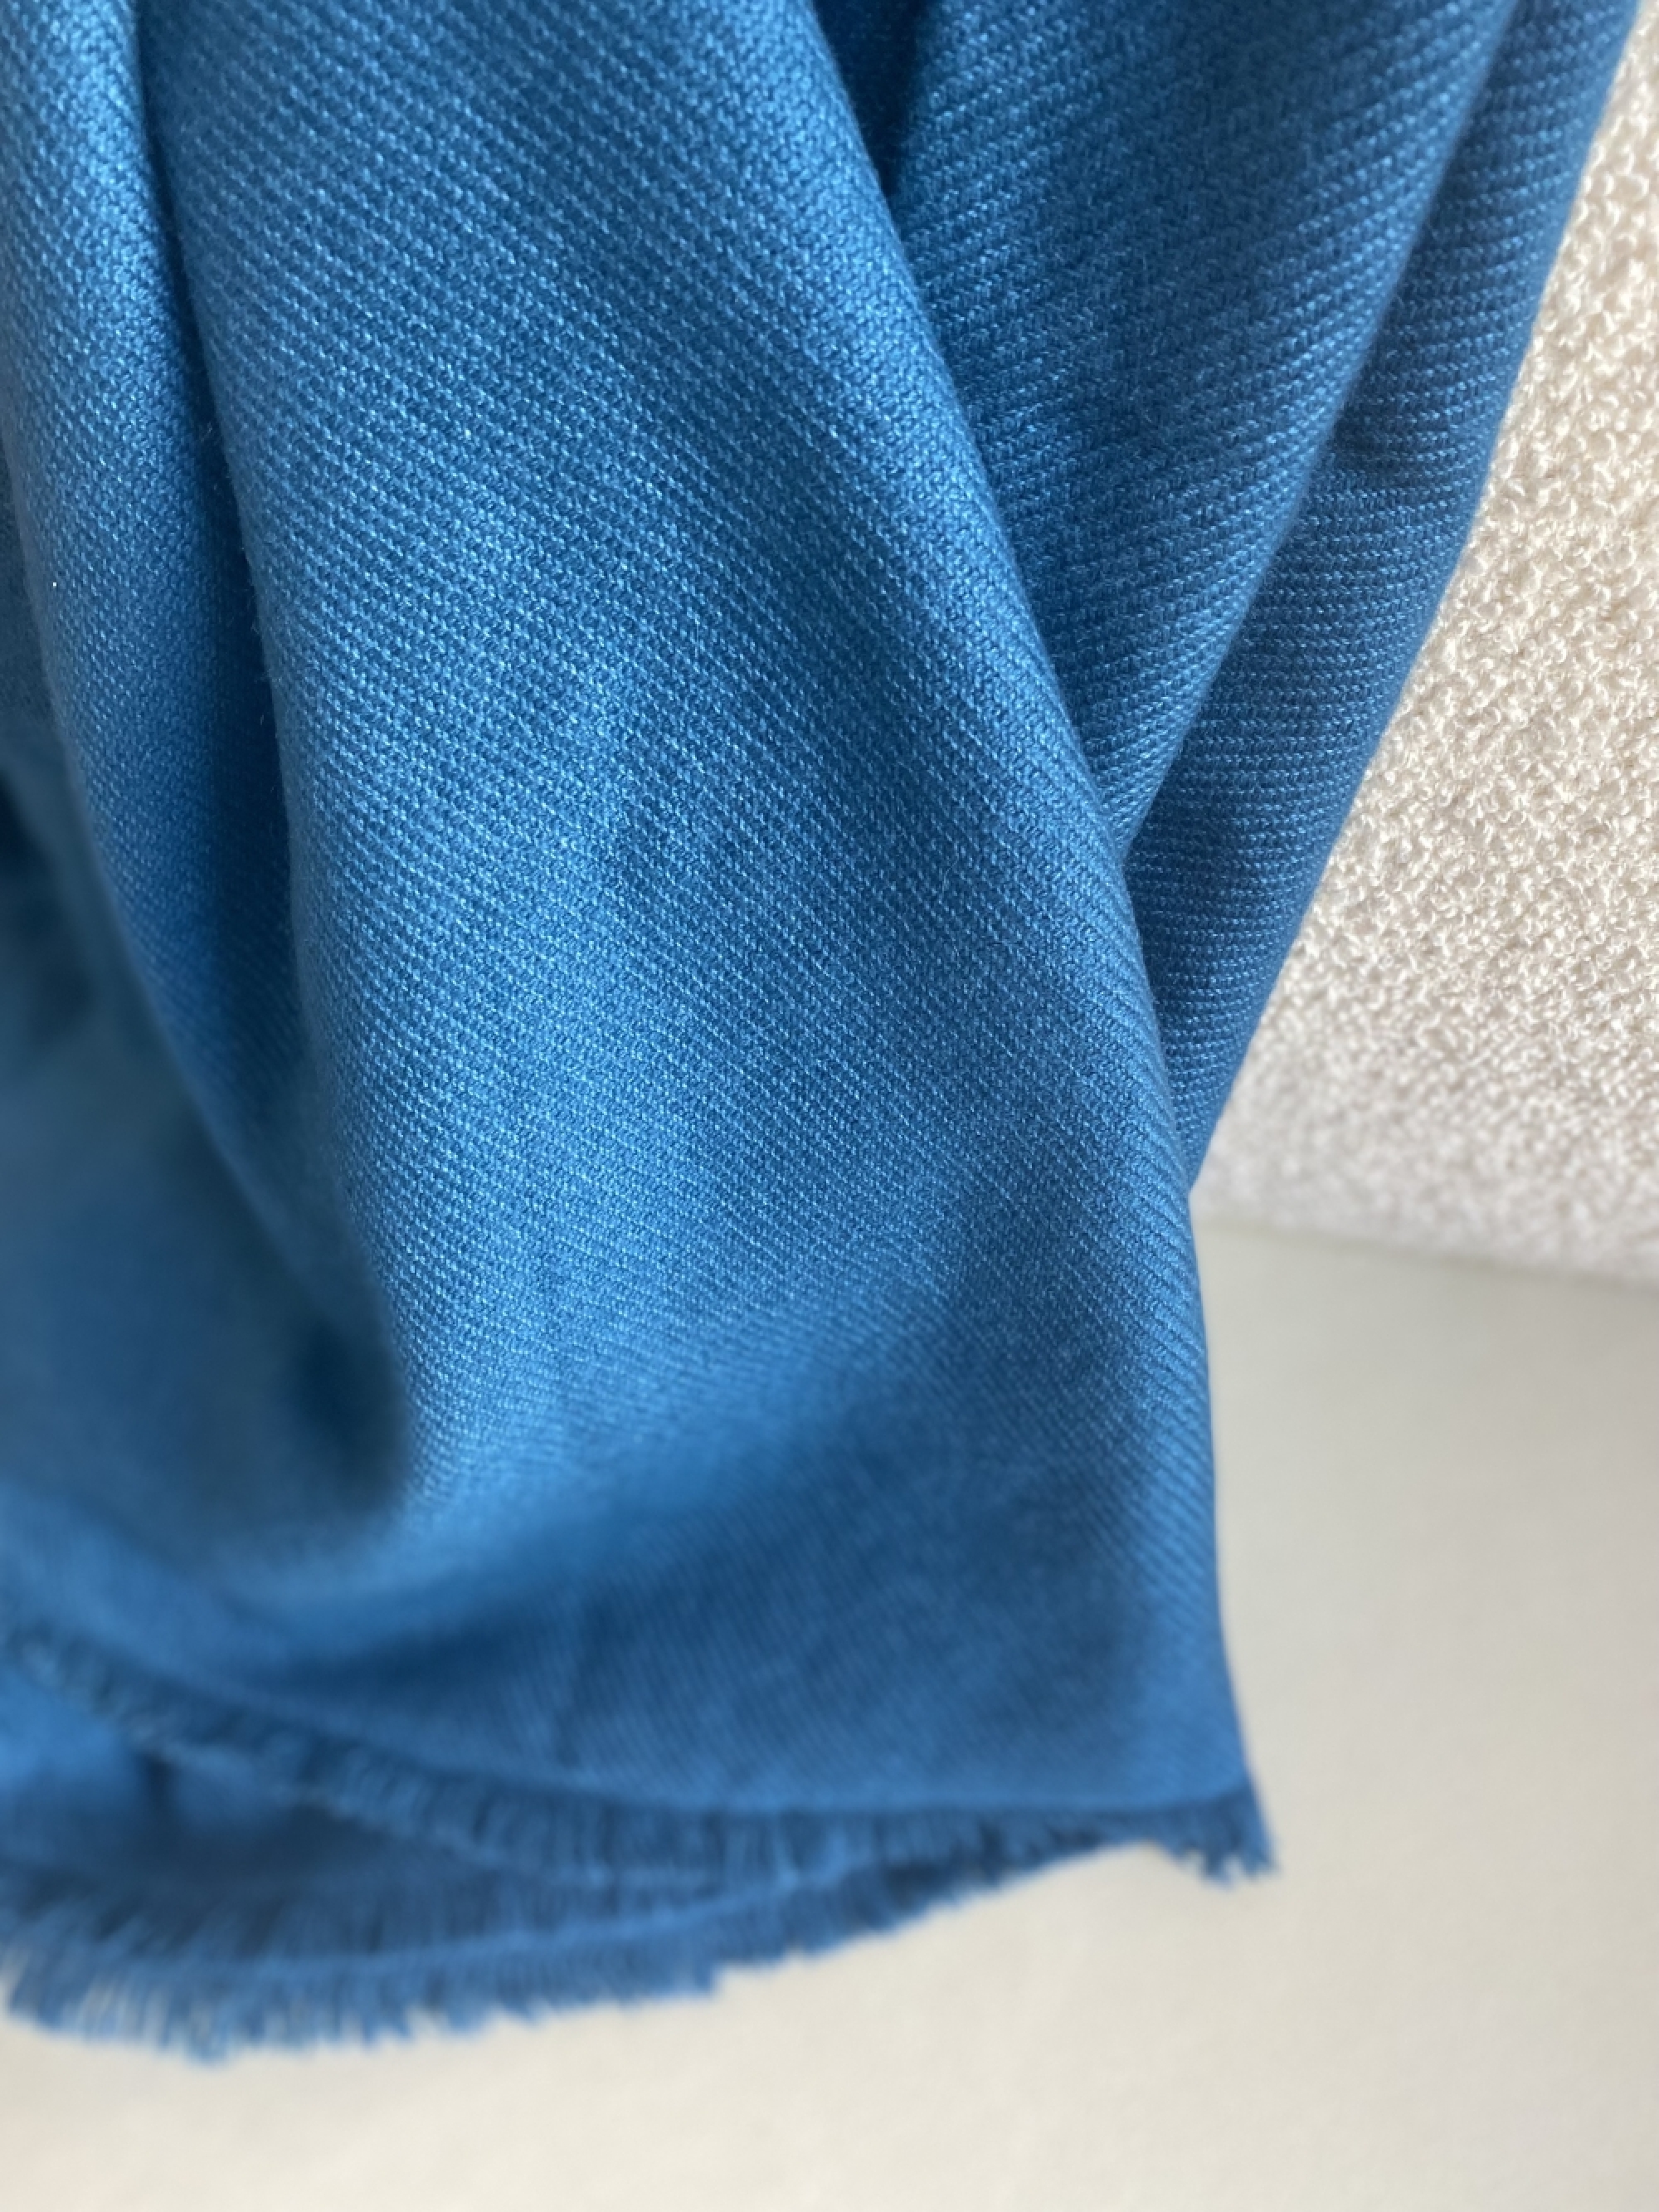 Cachemire accessoires homewear toodoo plain l 220 x 220 bleu canard 220x220cm